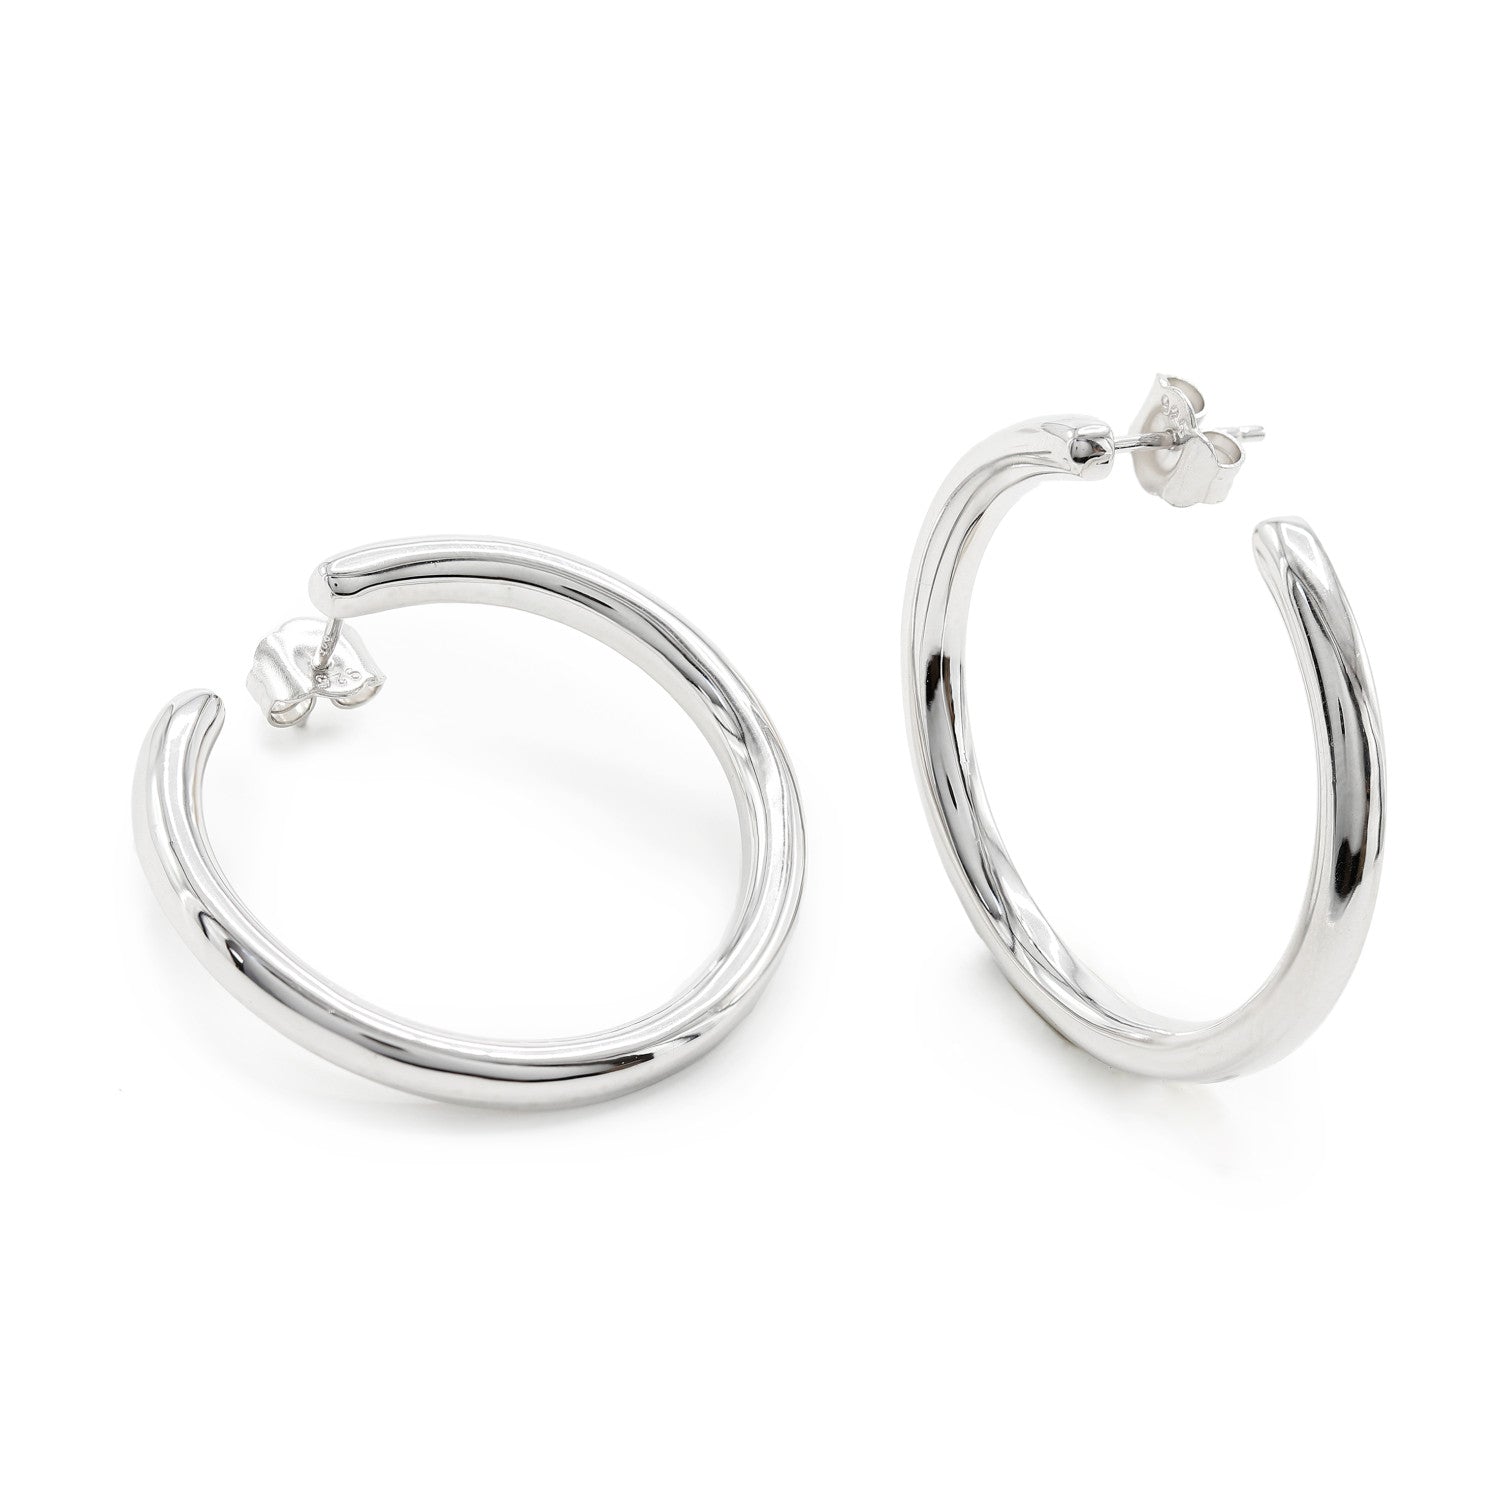 Earrings silver hoop earrings with tubular and side design